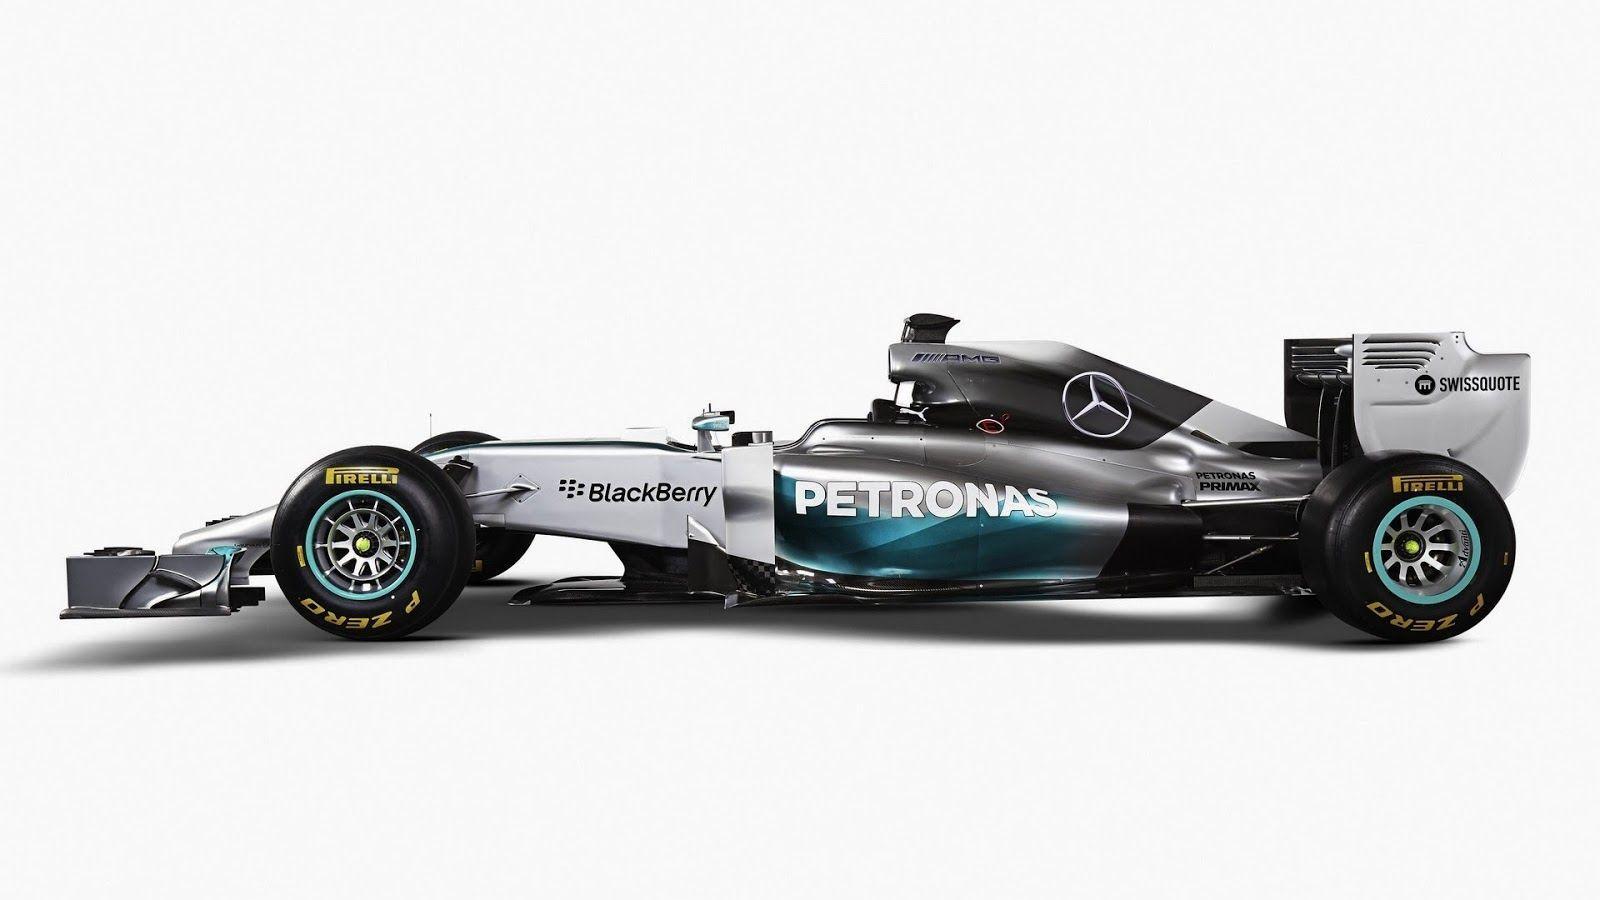 Mercedes AMG Petronas W05 2014 F1 Wallpaper